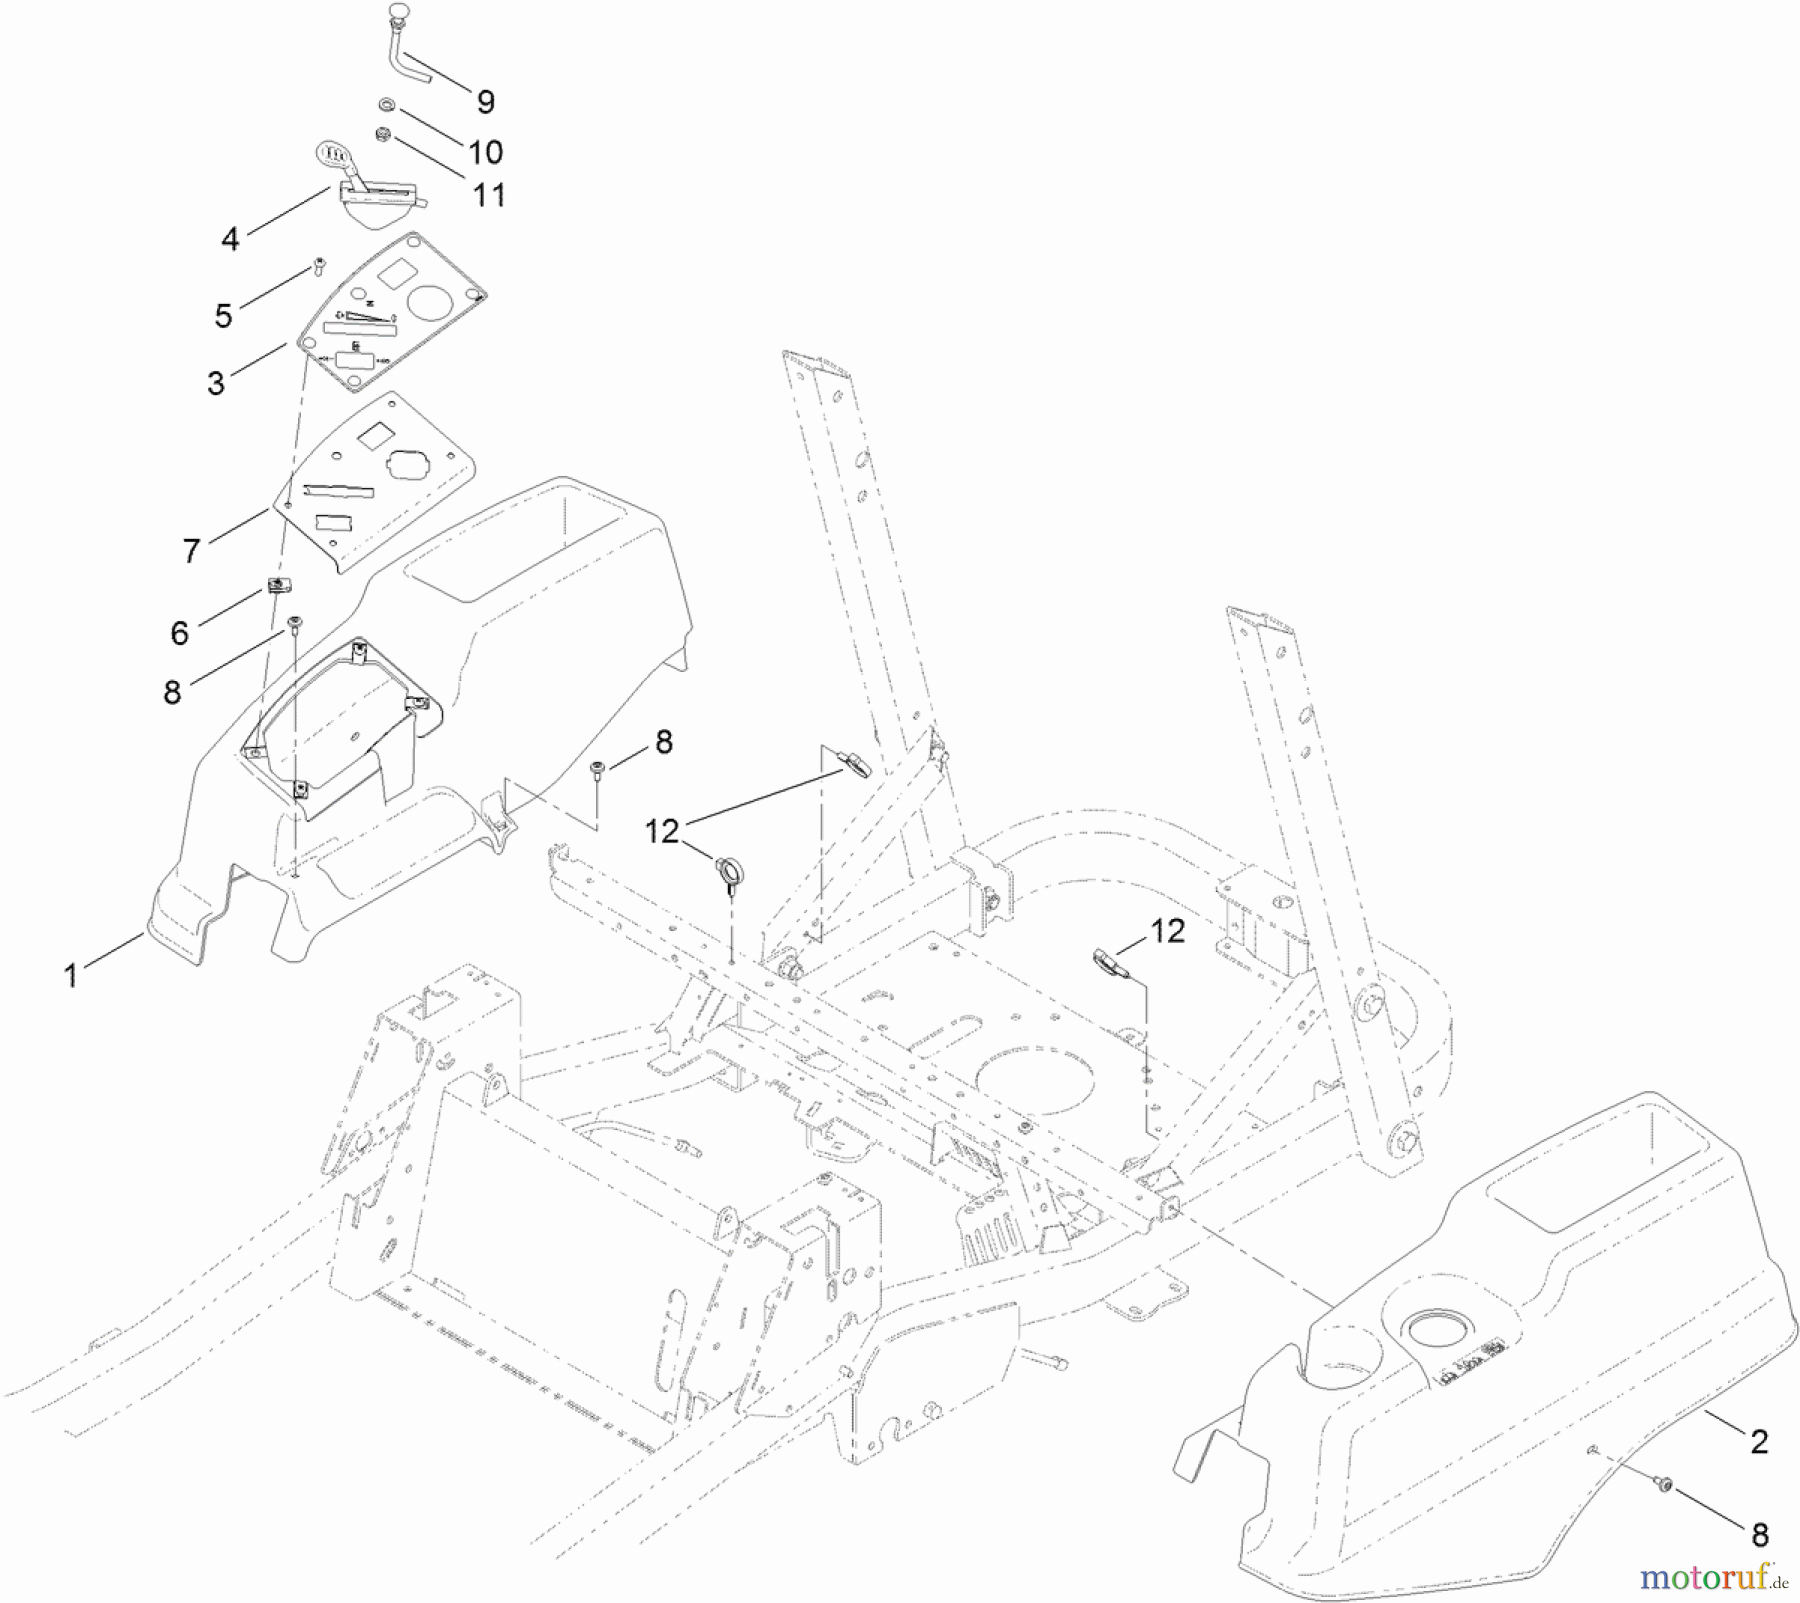  Toro Neu Mowers, Zero-Turn 74843 (ZX6020) - Toro TITAN ZX6020 Zero-Turn-Radius Riding Mower, 2012 (SN 312000001-312999999) CONTROL PANEL AND BODY STYLING POD ASSEMBLY